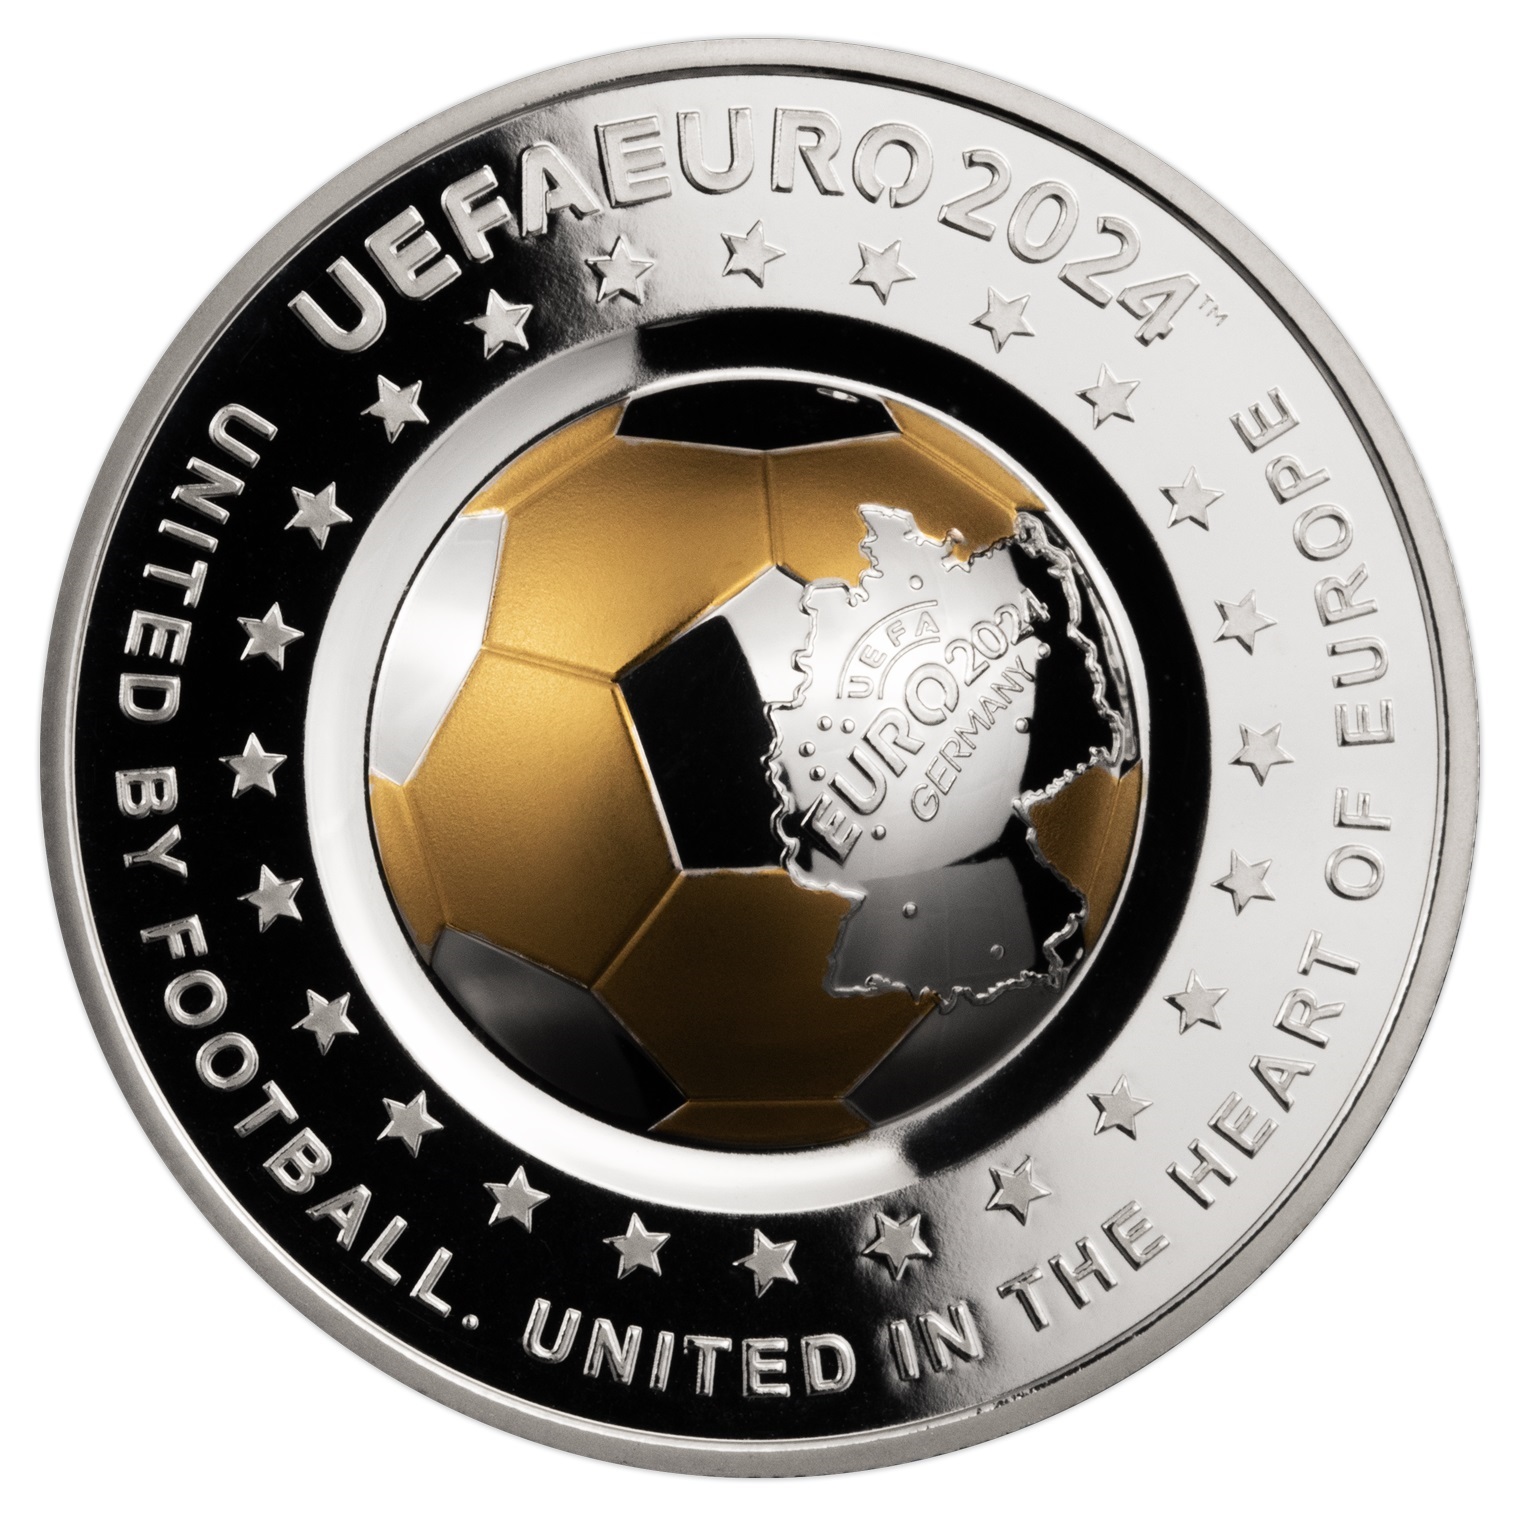 (W120.100.T.2024.20.g.Ag.1) 100 Tenge Kazakhstan 2024 20 grams Proof silver - UEFA Euro, Germany 2024 Reverse (zoom)